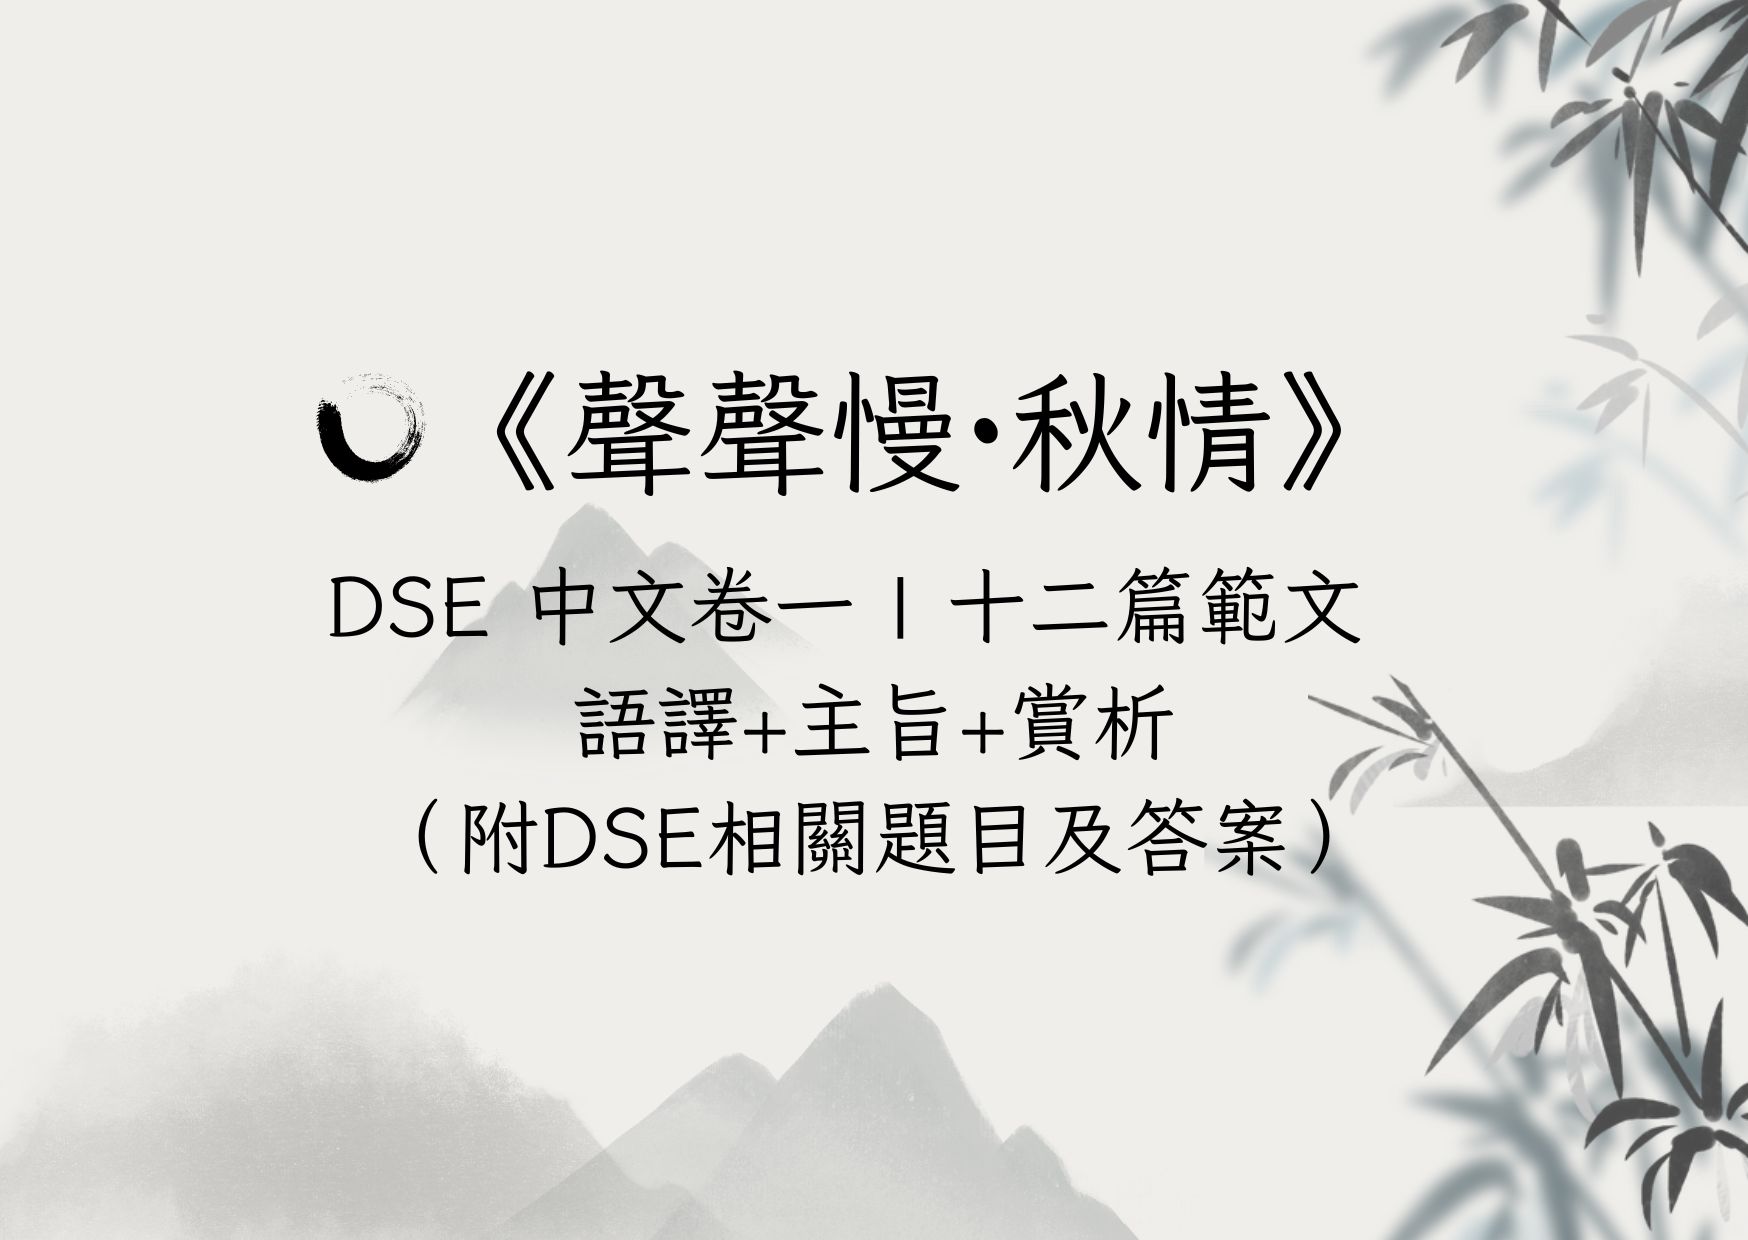 Issac Lo 中文資源：DSE中文卷一十二篇範文《聲聲慢·秋情》